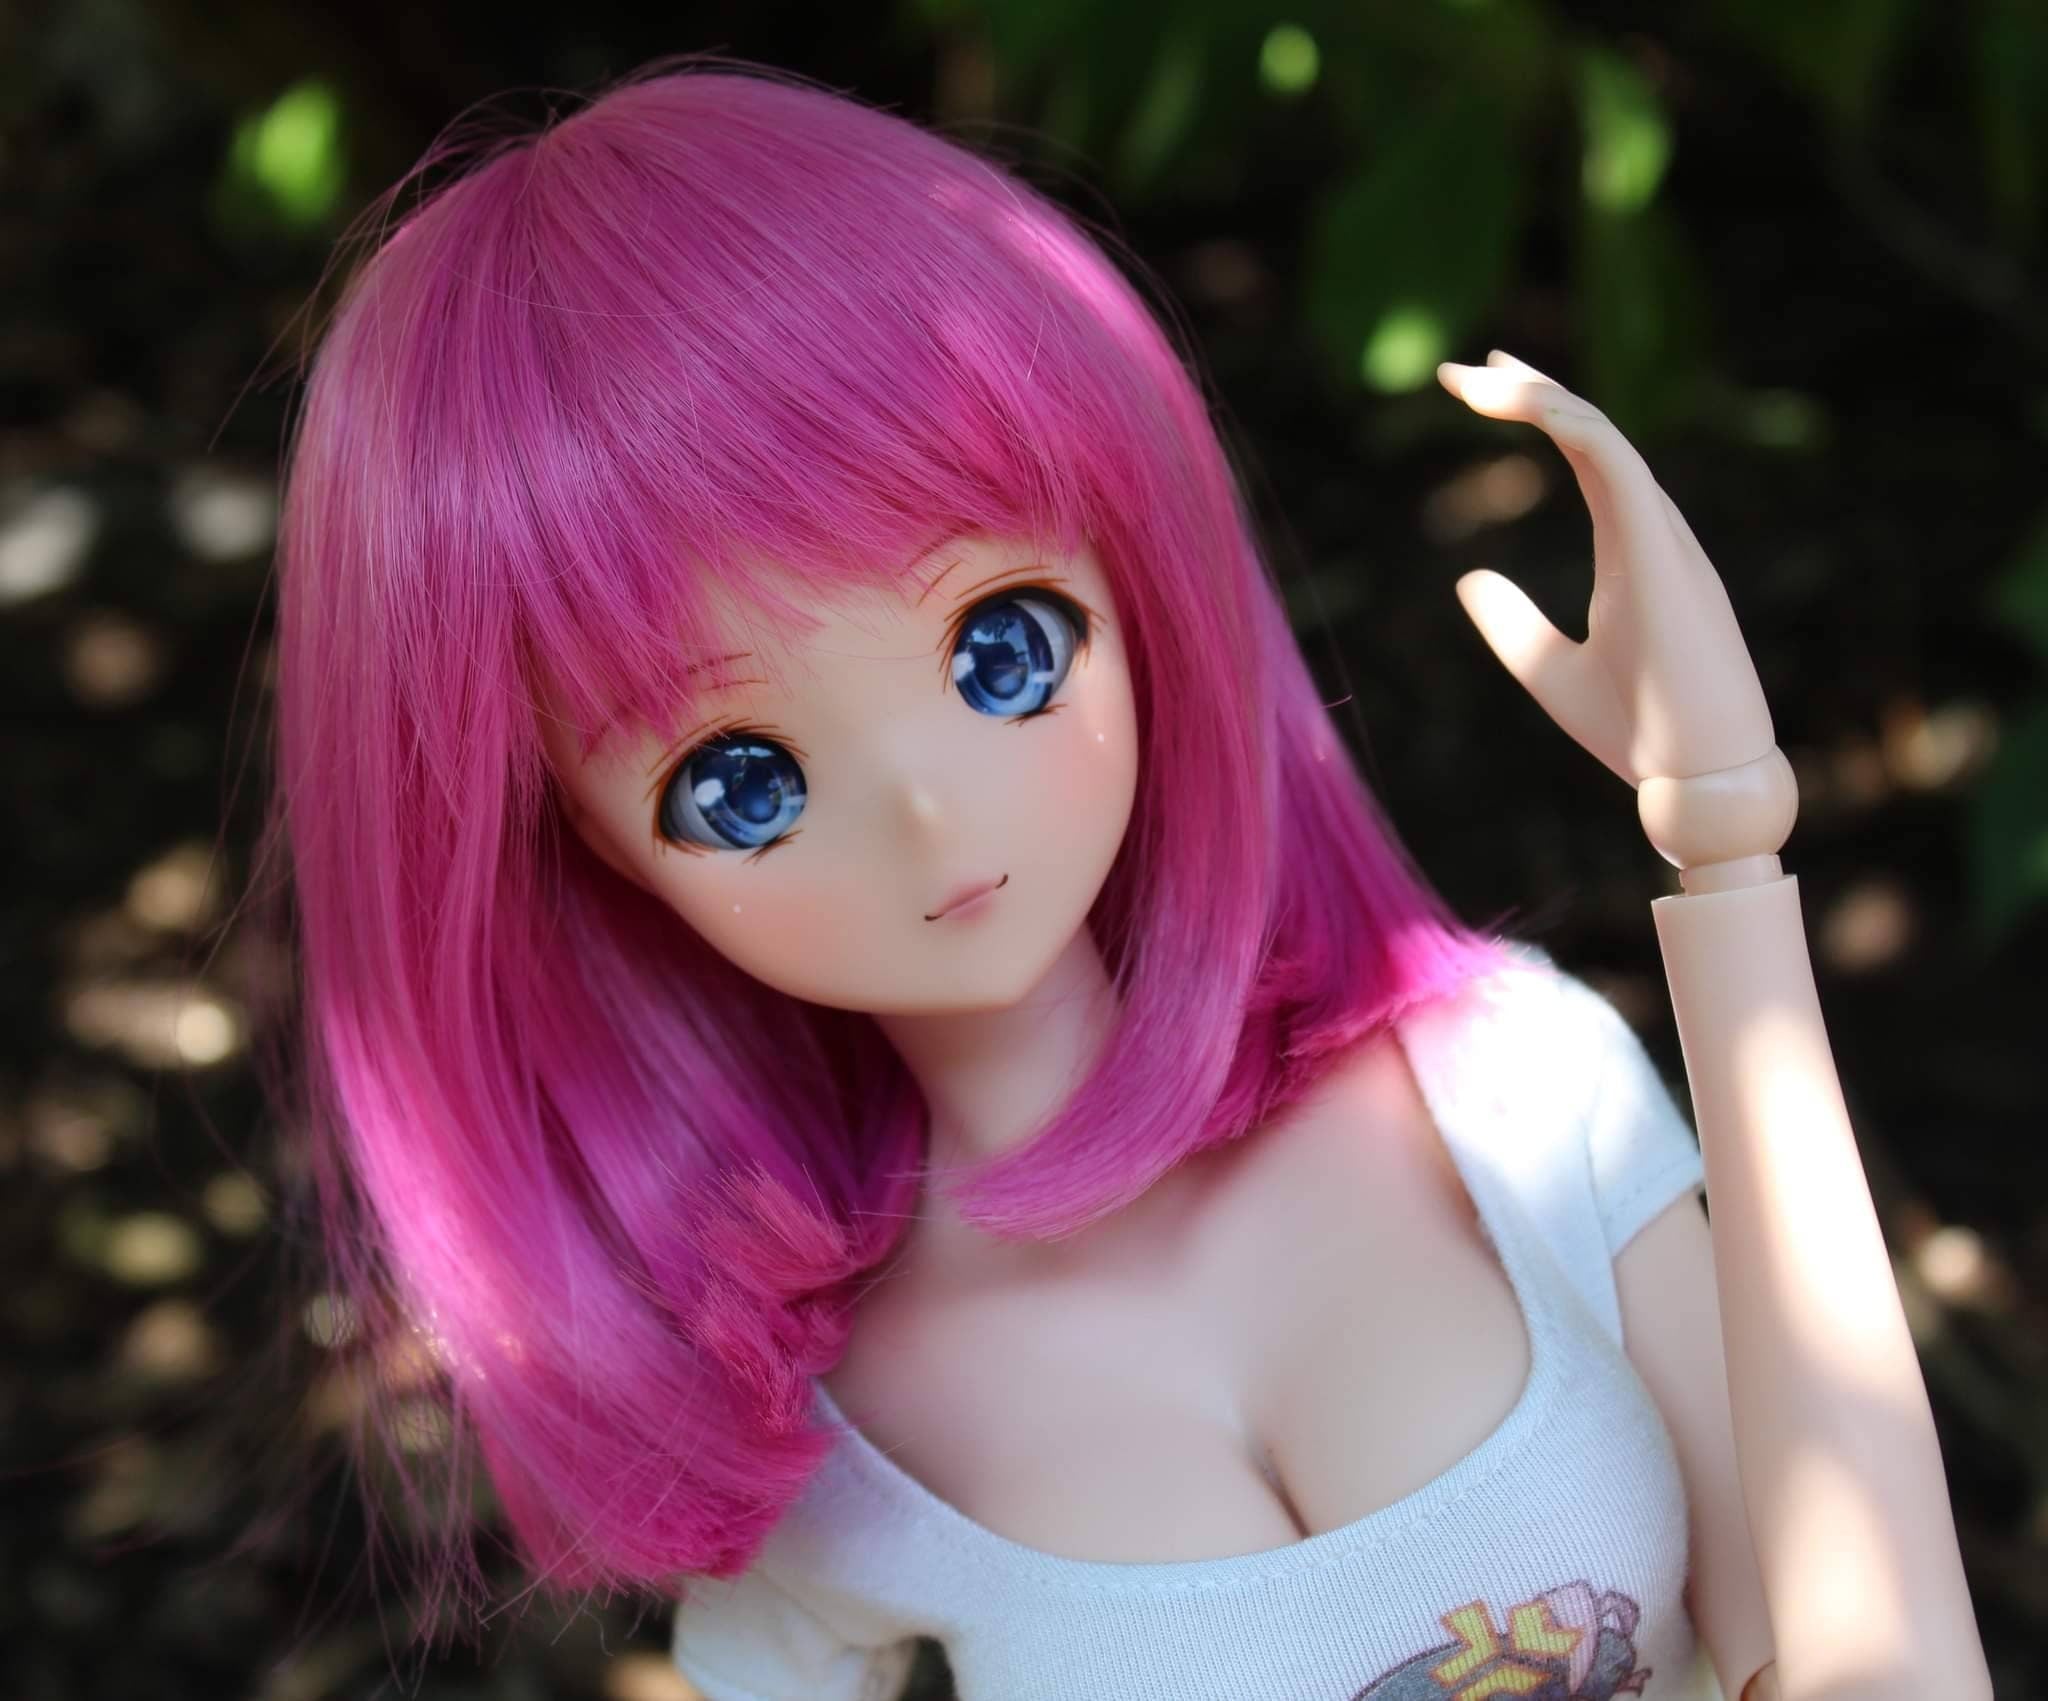 Custom doll WIG for Smart Dolls- Heat Safe - Tangle Resistant- 8.5" head size of Bjd, SD, Dollfie Dream dolls pink bob